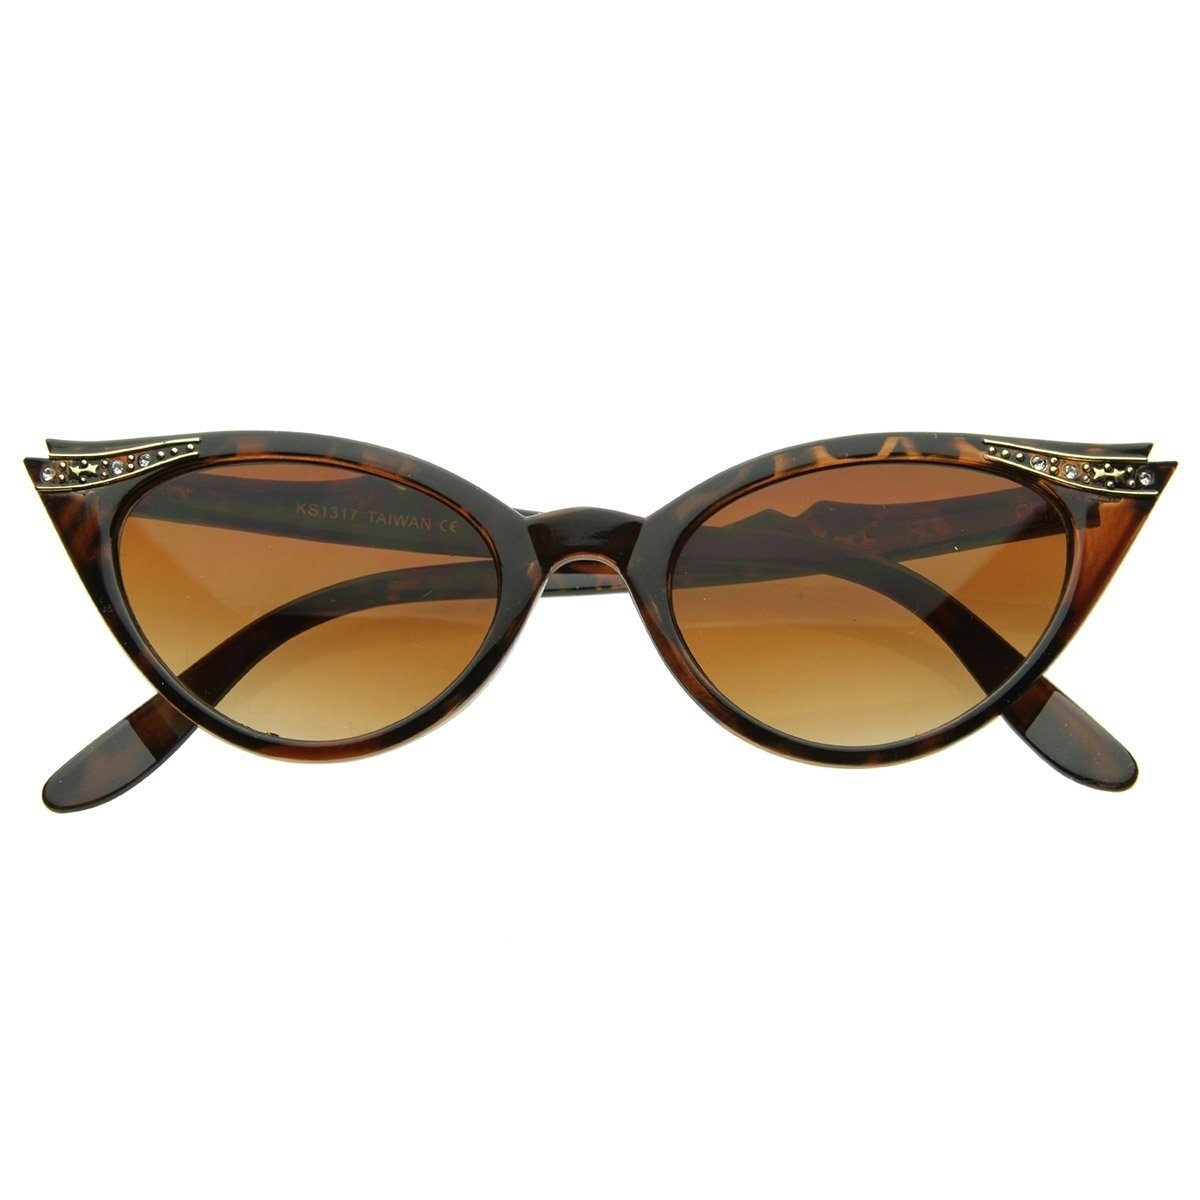 Vintage Inspired Mod Womens Fashion Rhinestone Cat Eye Sunglasses - Black